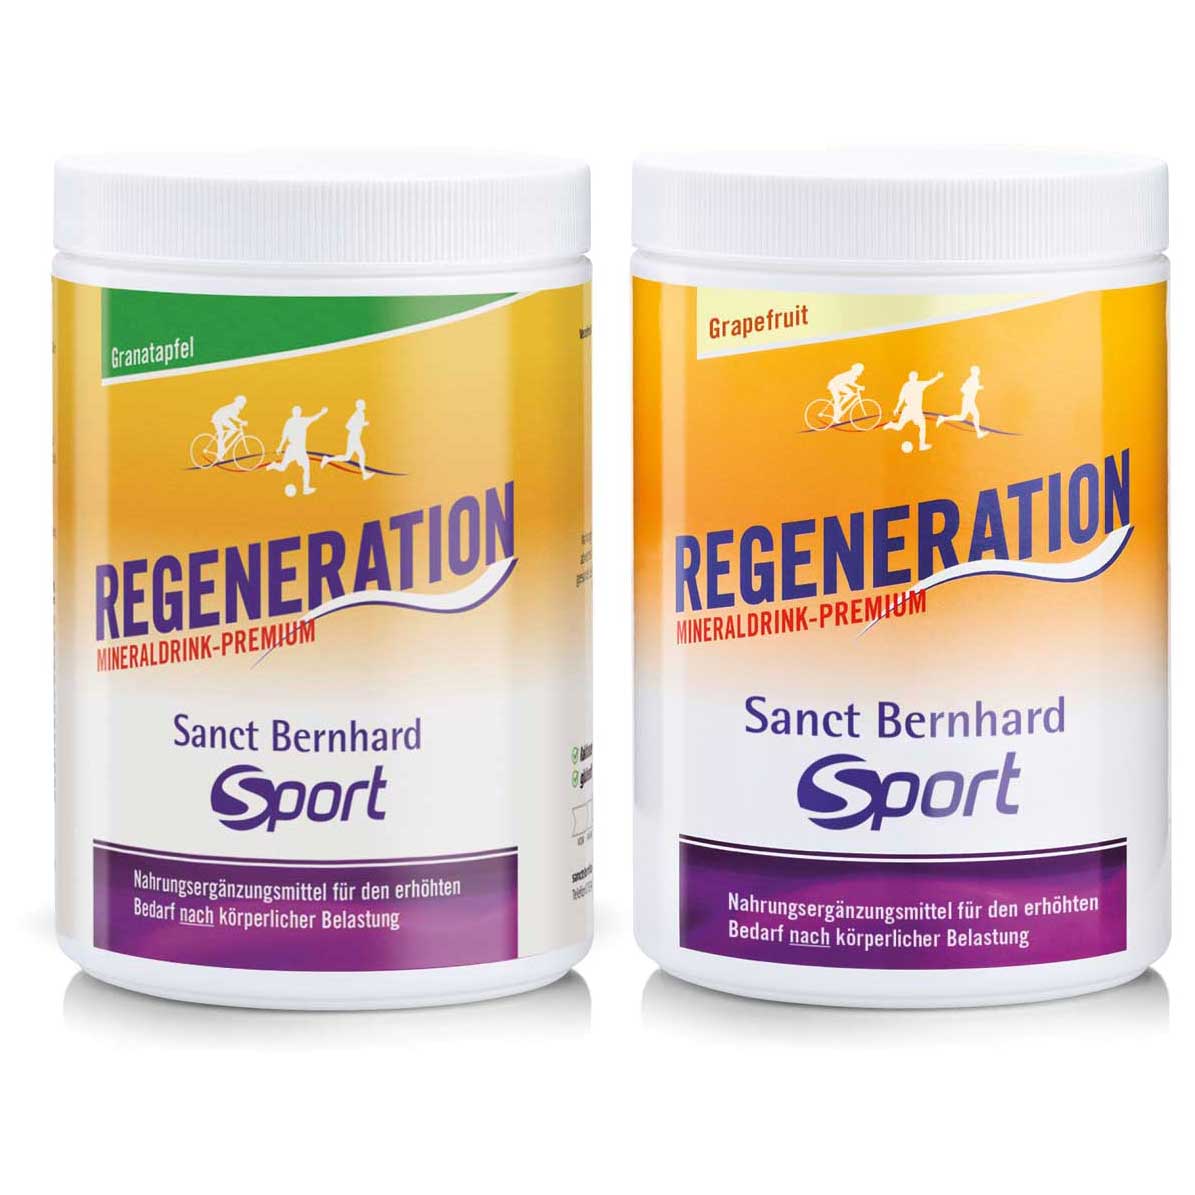 Productfoto van Sanct Bernhard Sport Regeneration Mineral Drank Premium - 750g